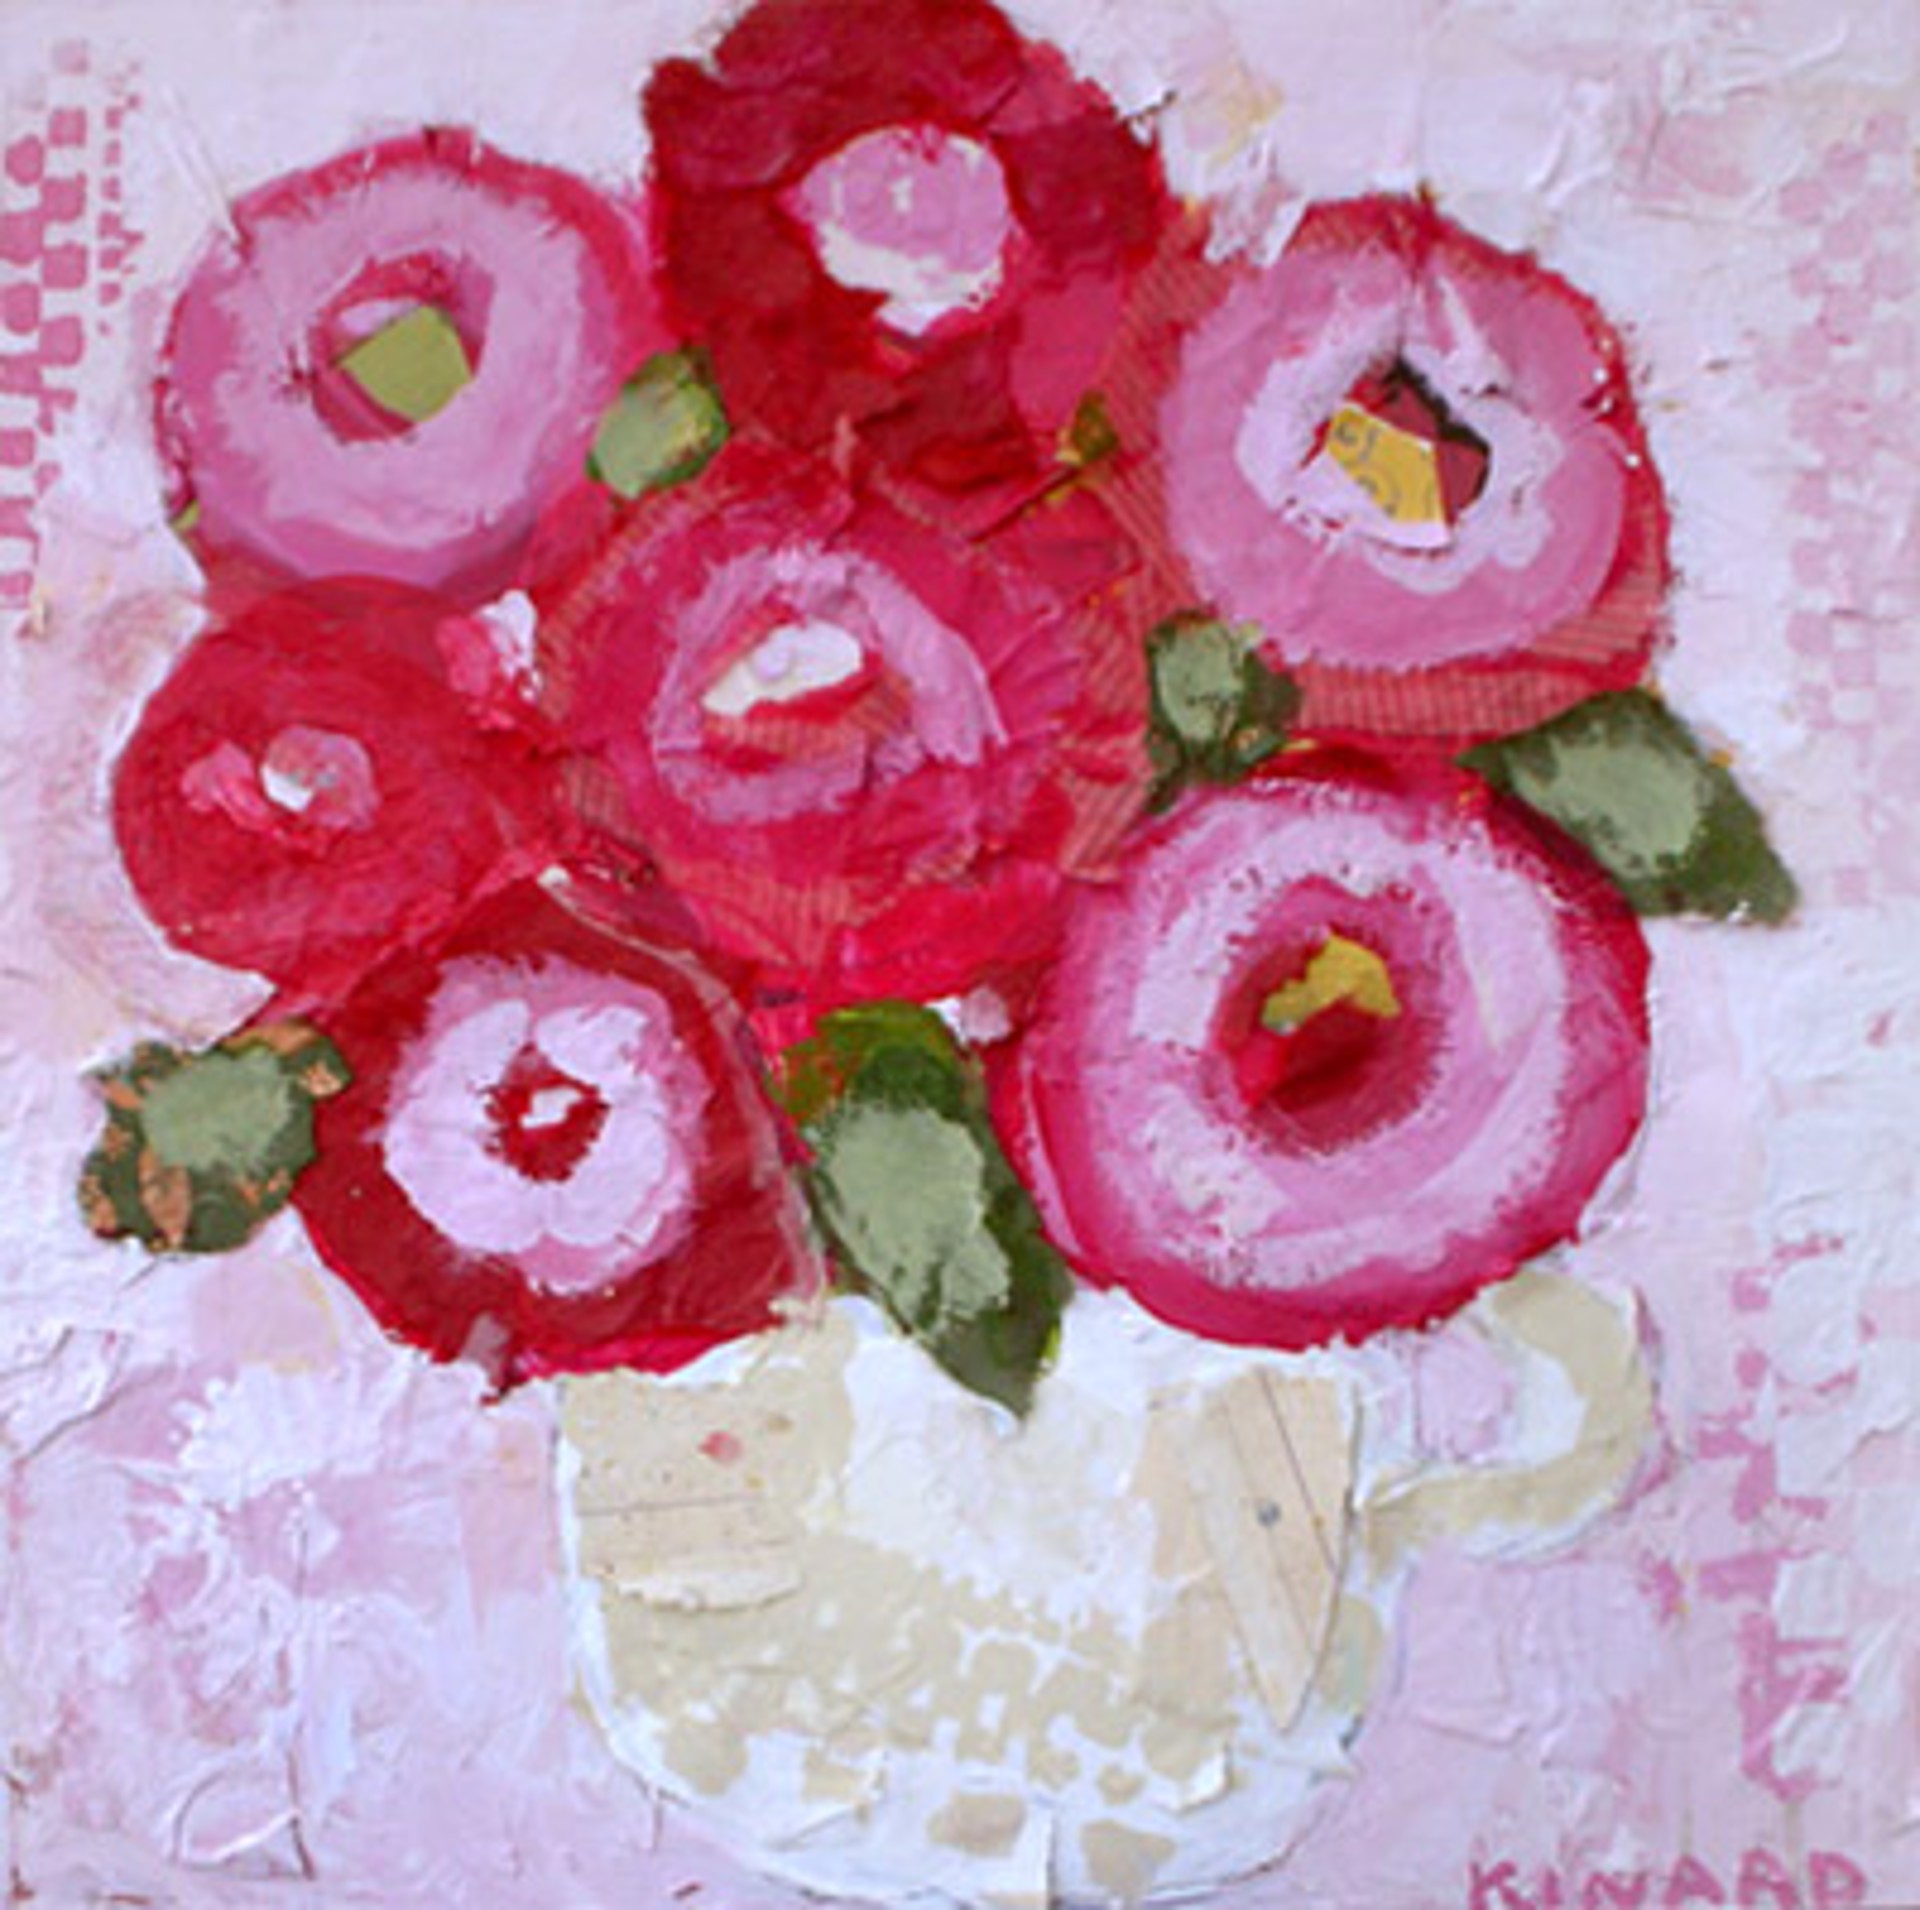 Rose Tea by Christy Kinard